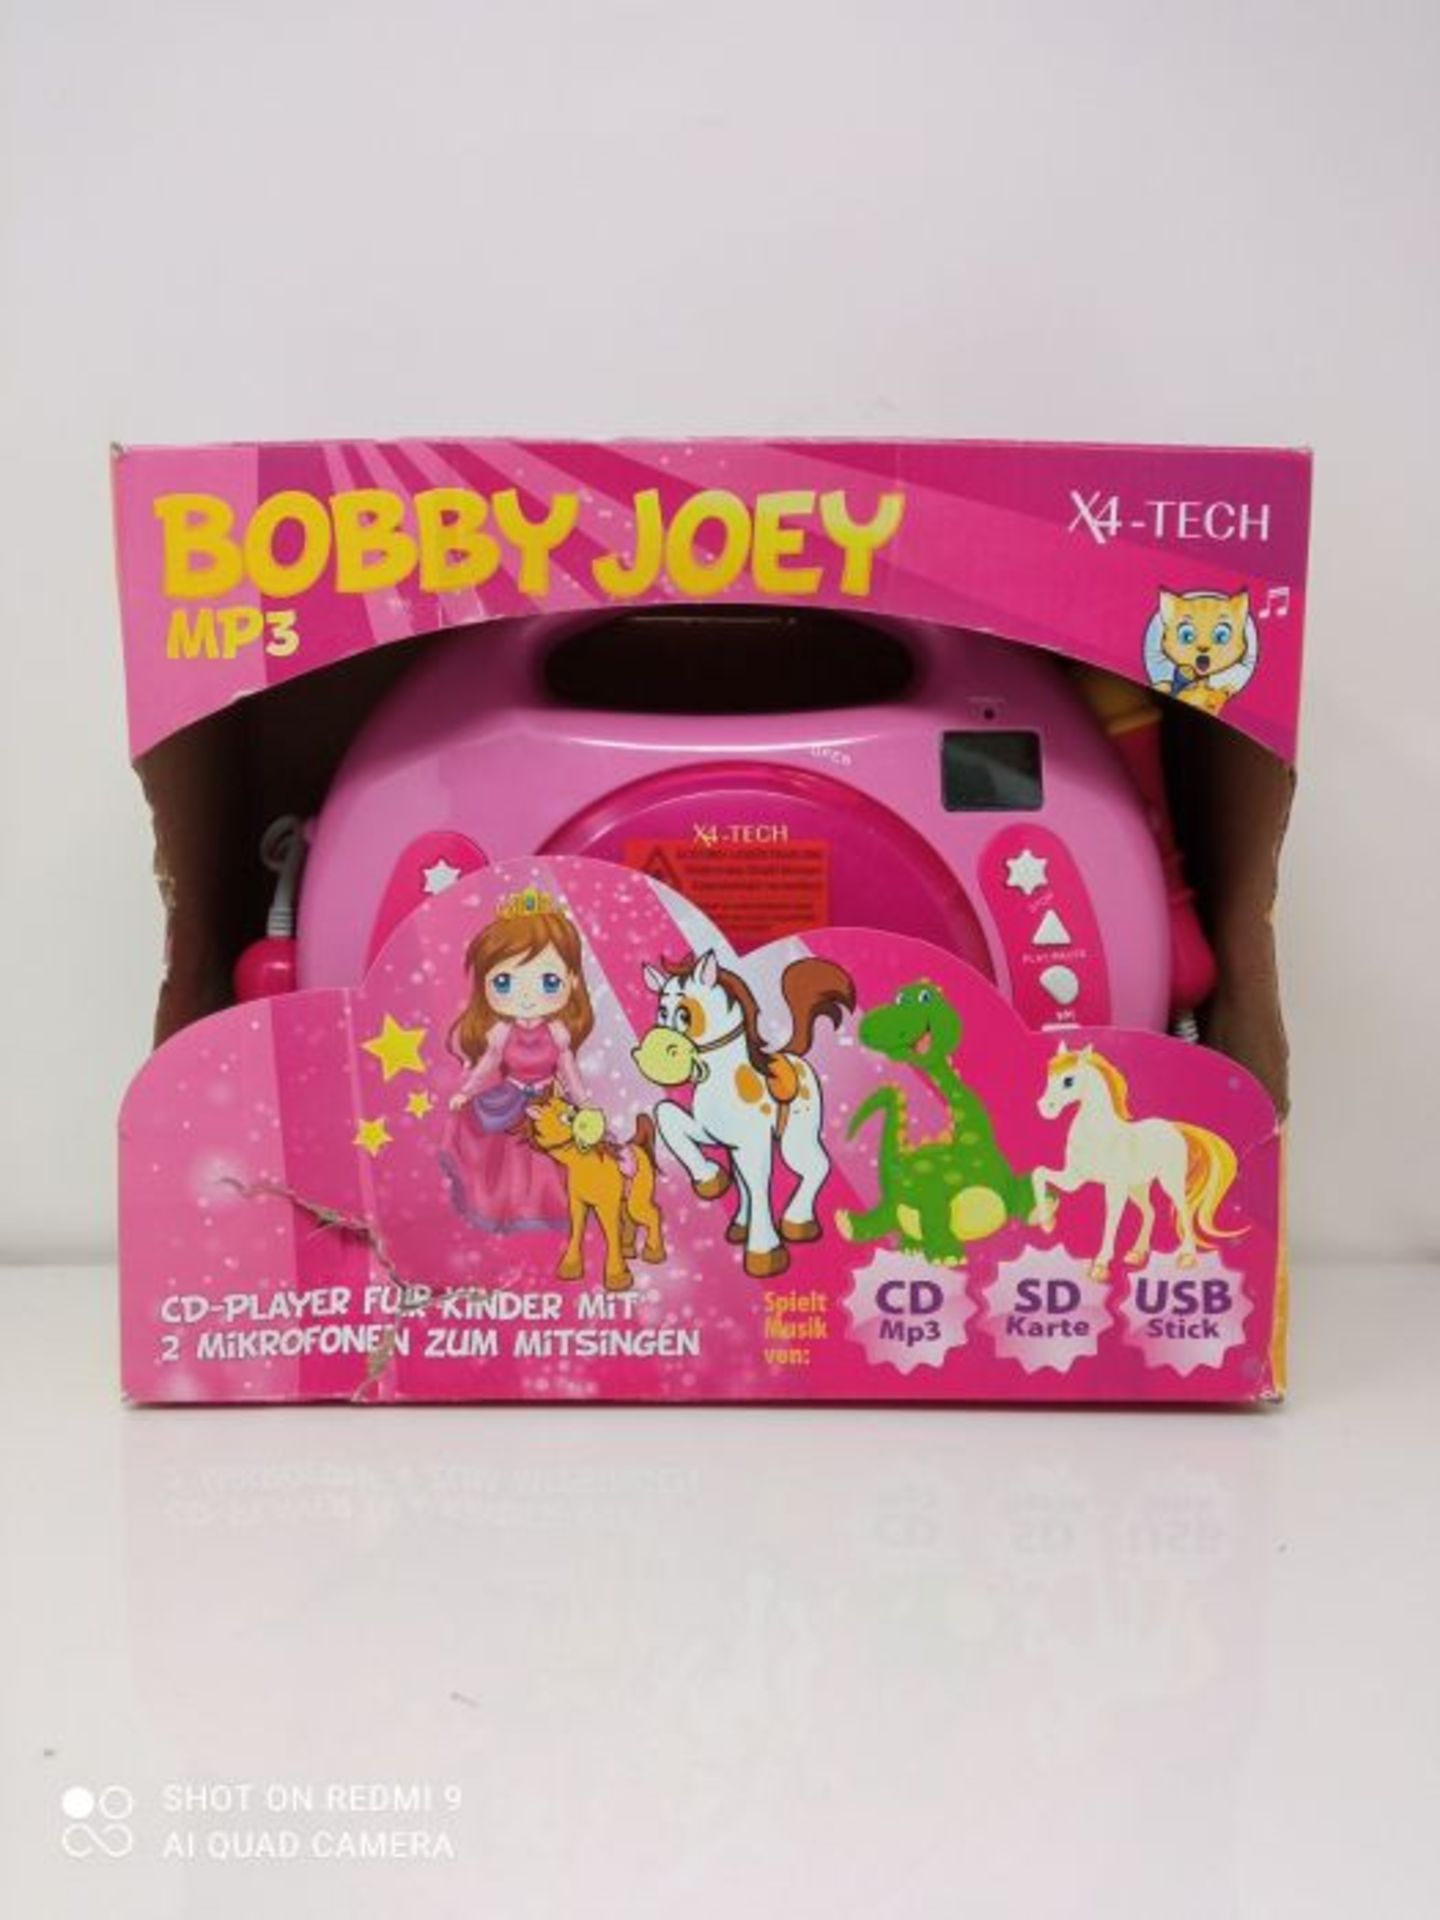 X4-TECH Bobby Joey - Kinder CD Player fÃ¼r USB-Stick, SD-Karte, MP3-CD - 2X Mikrofon - Image 2 of 3